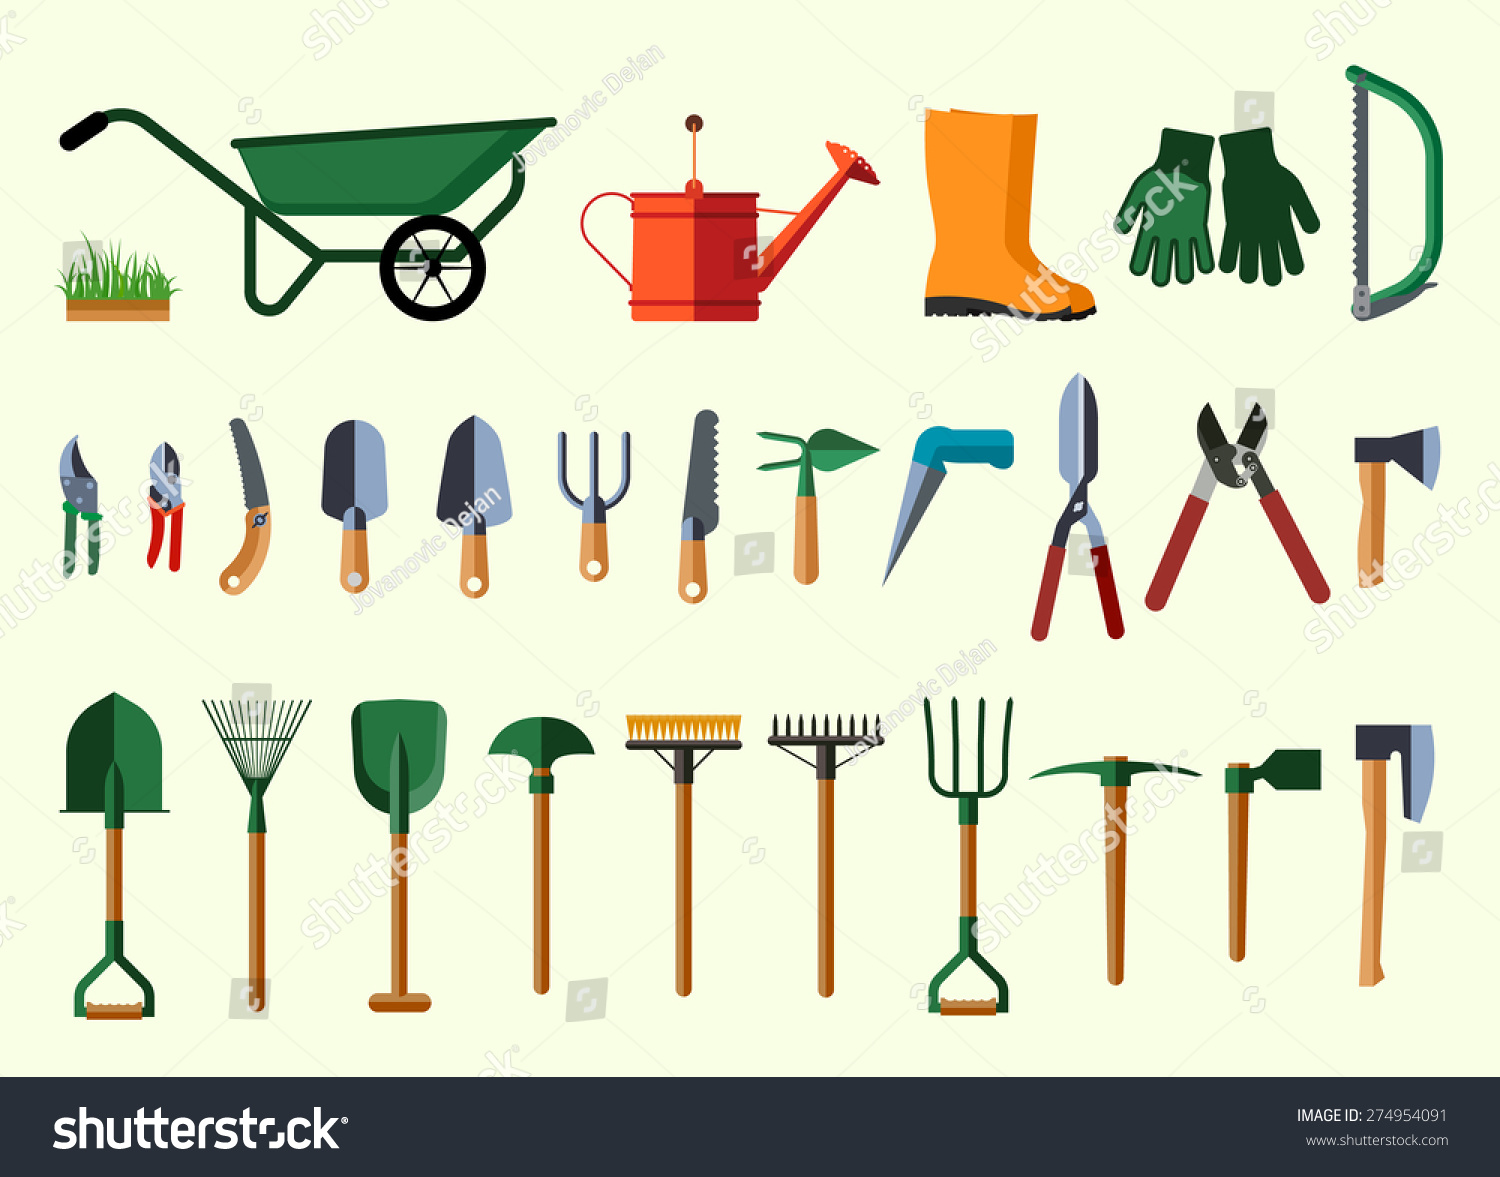 clipart gardening tools - photo #42